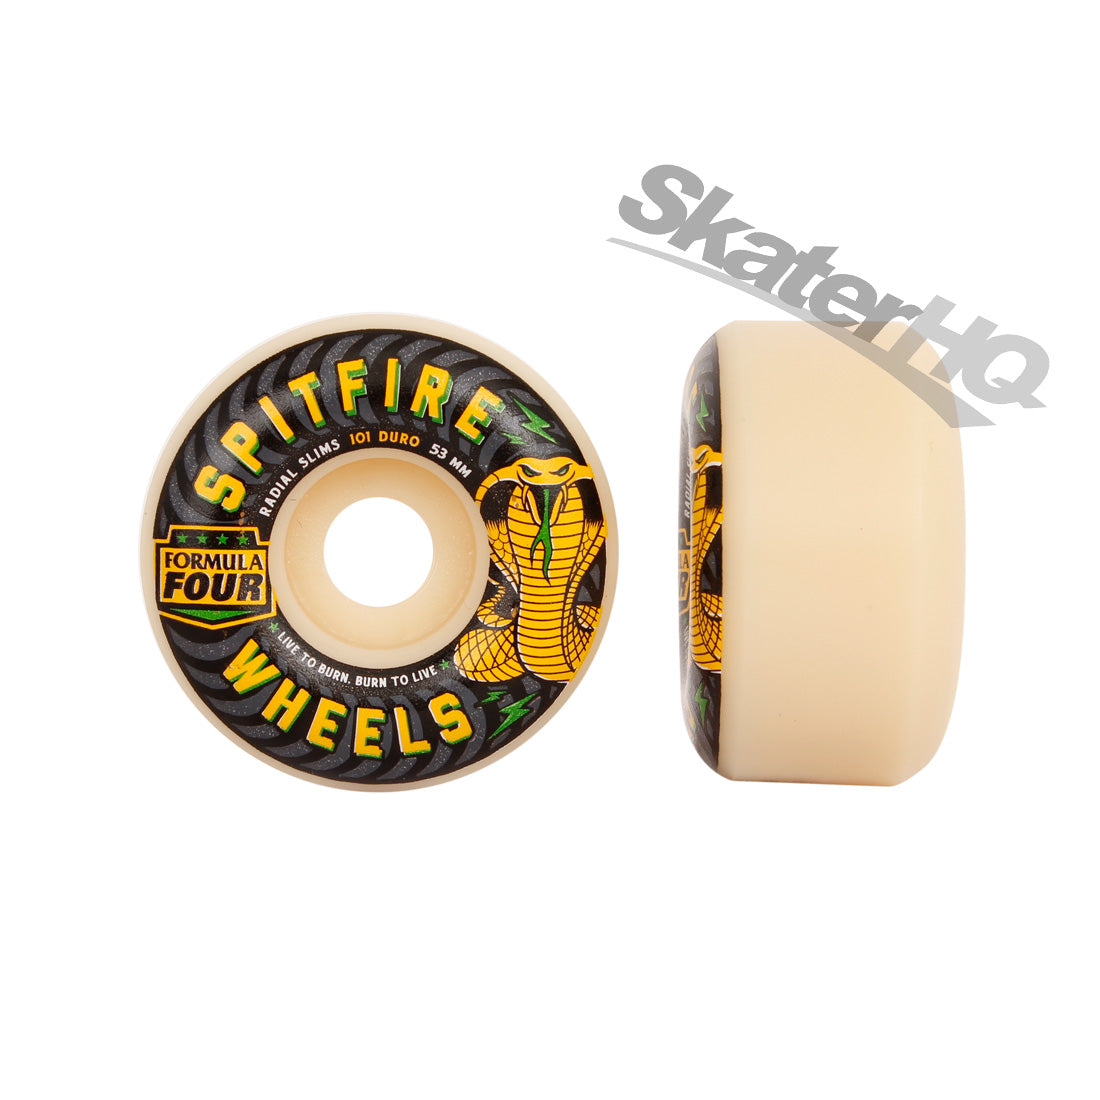 Spitfire Formula Four 101A Radial Slim 53mm Skateboard Wheels